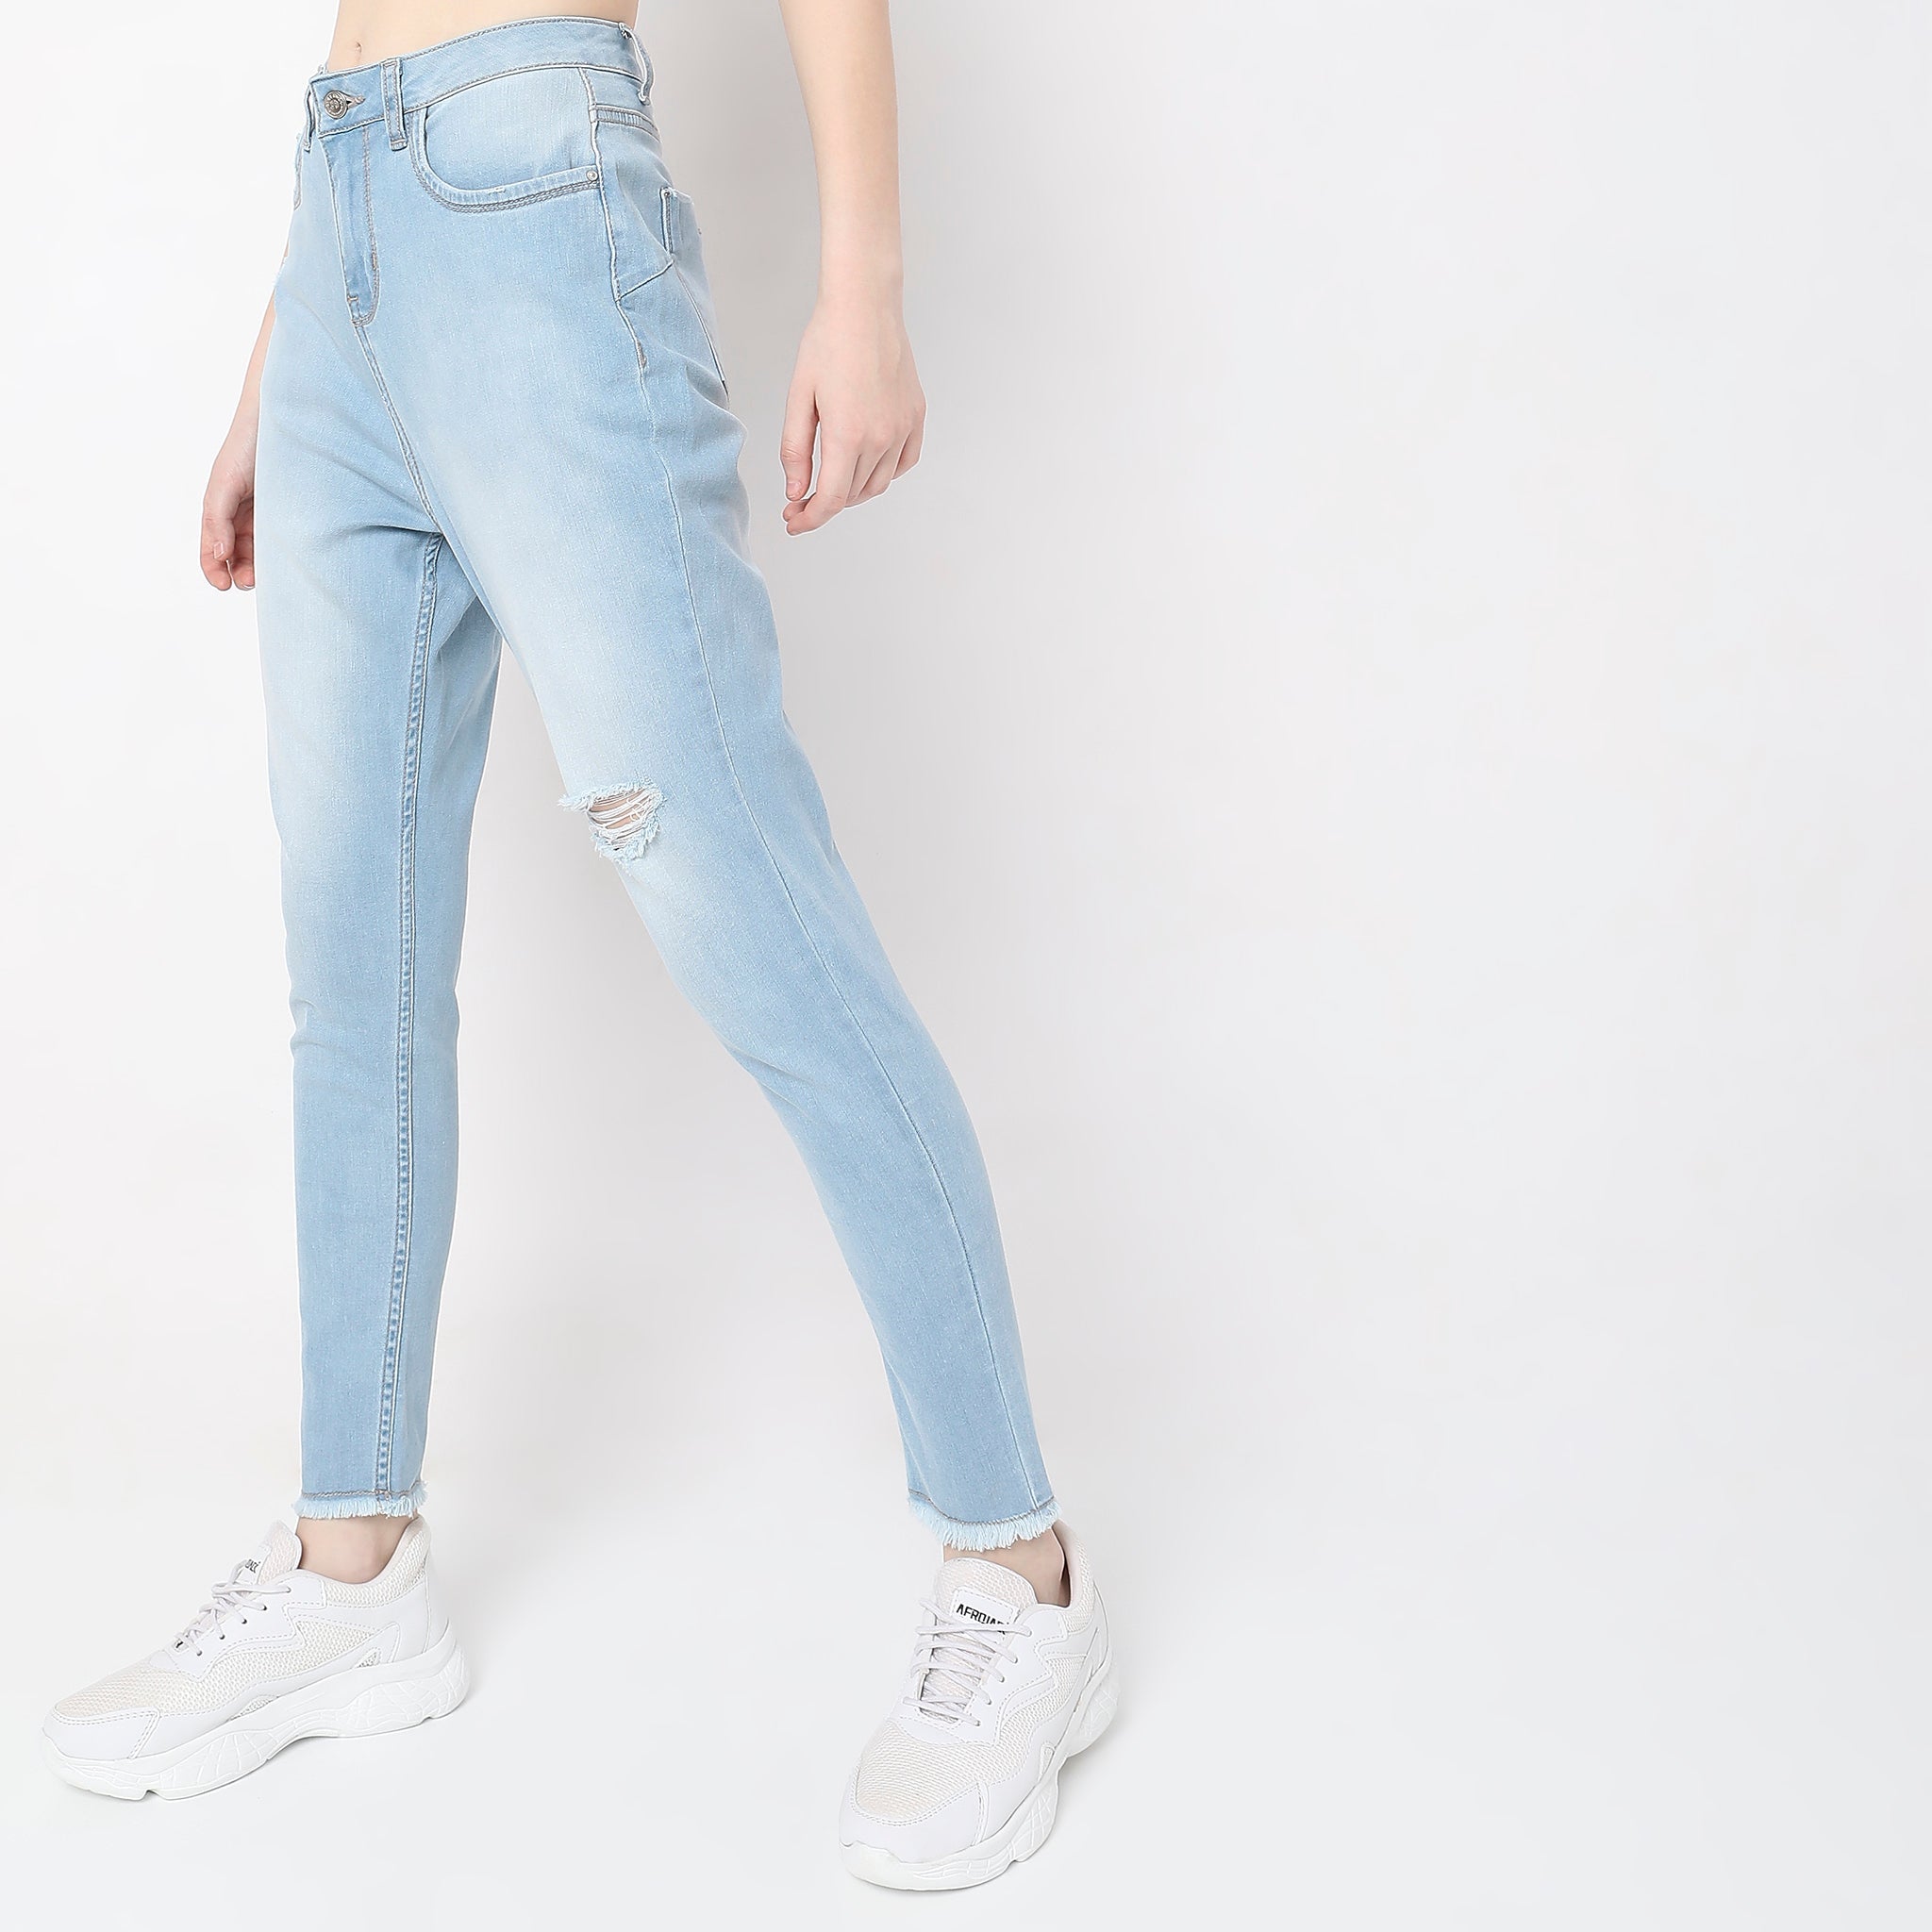 Women Wearing Skinny Fit Solid High Rise Jean